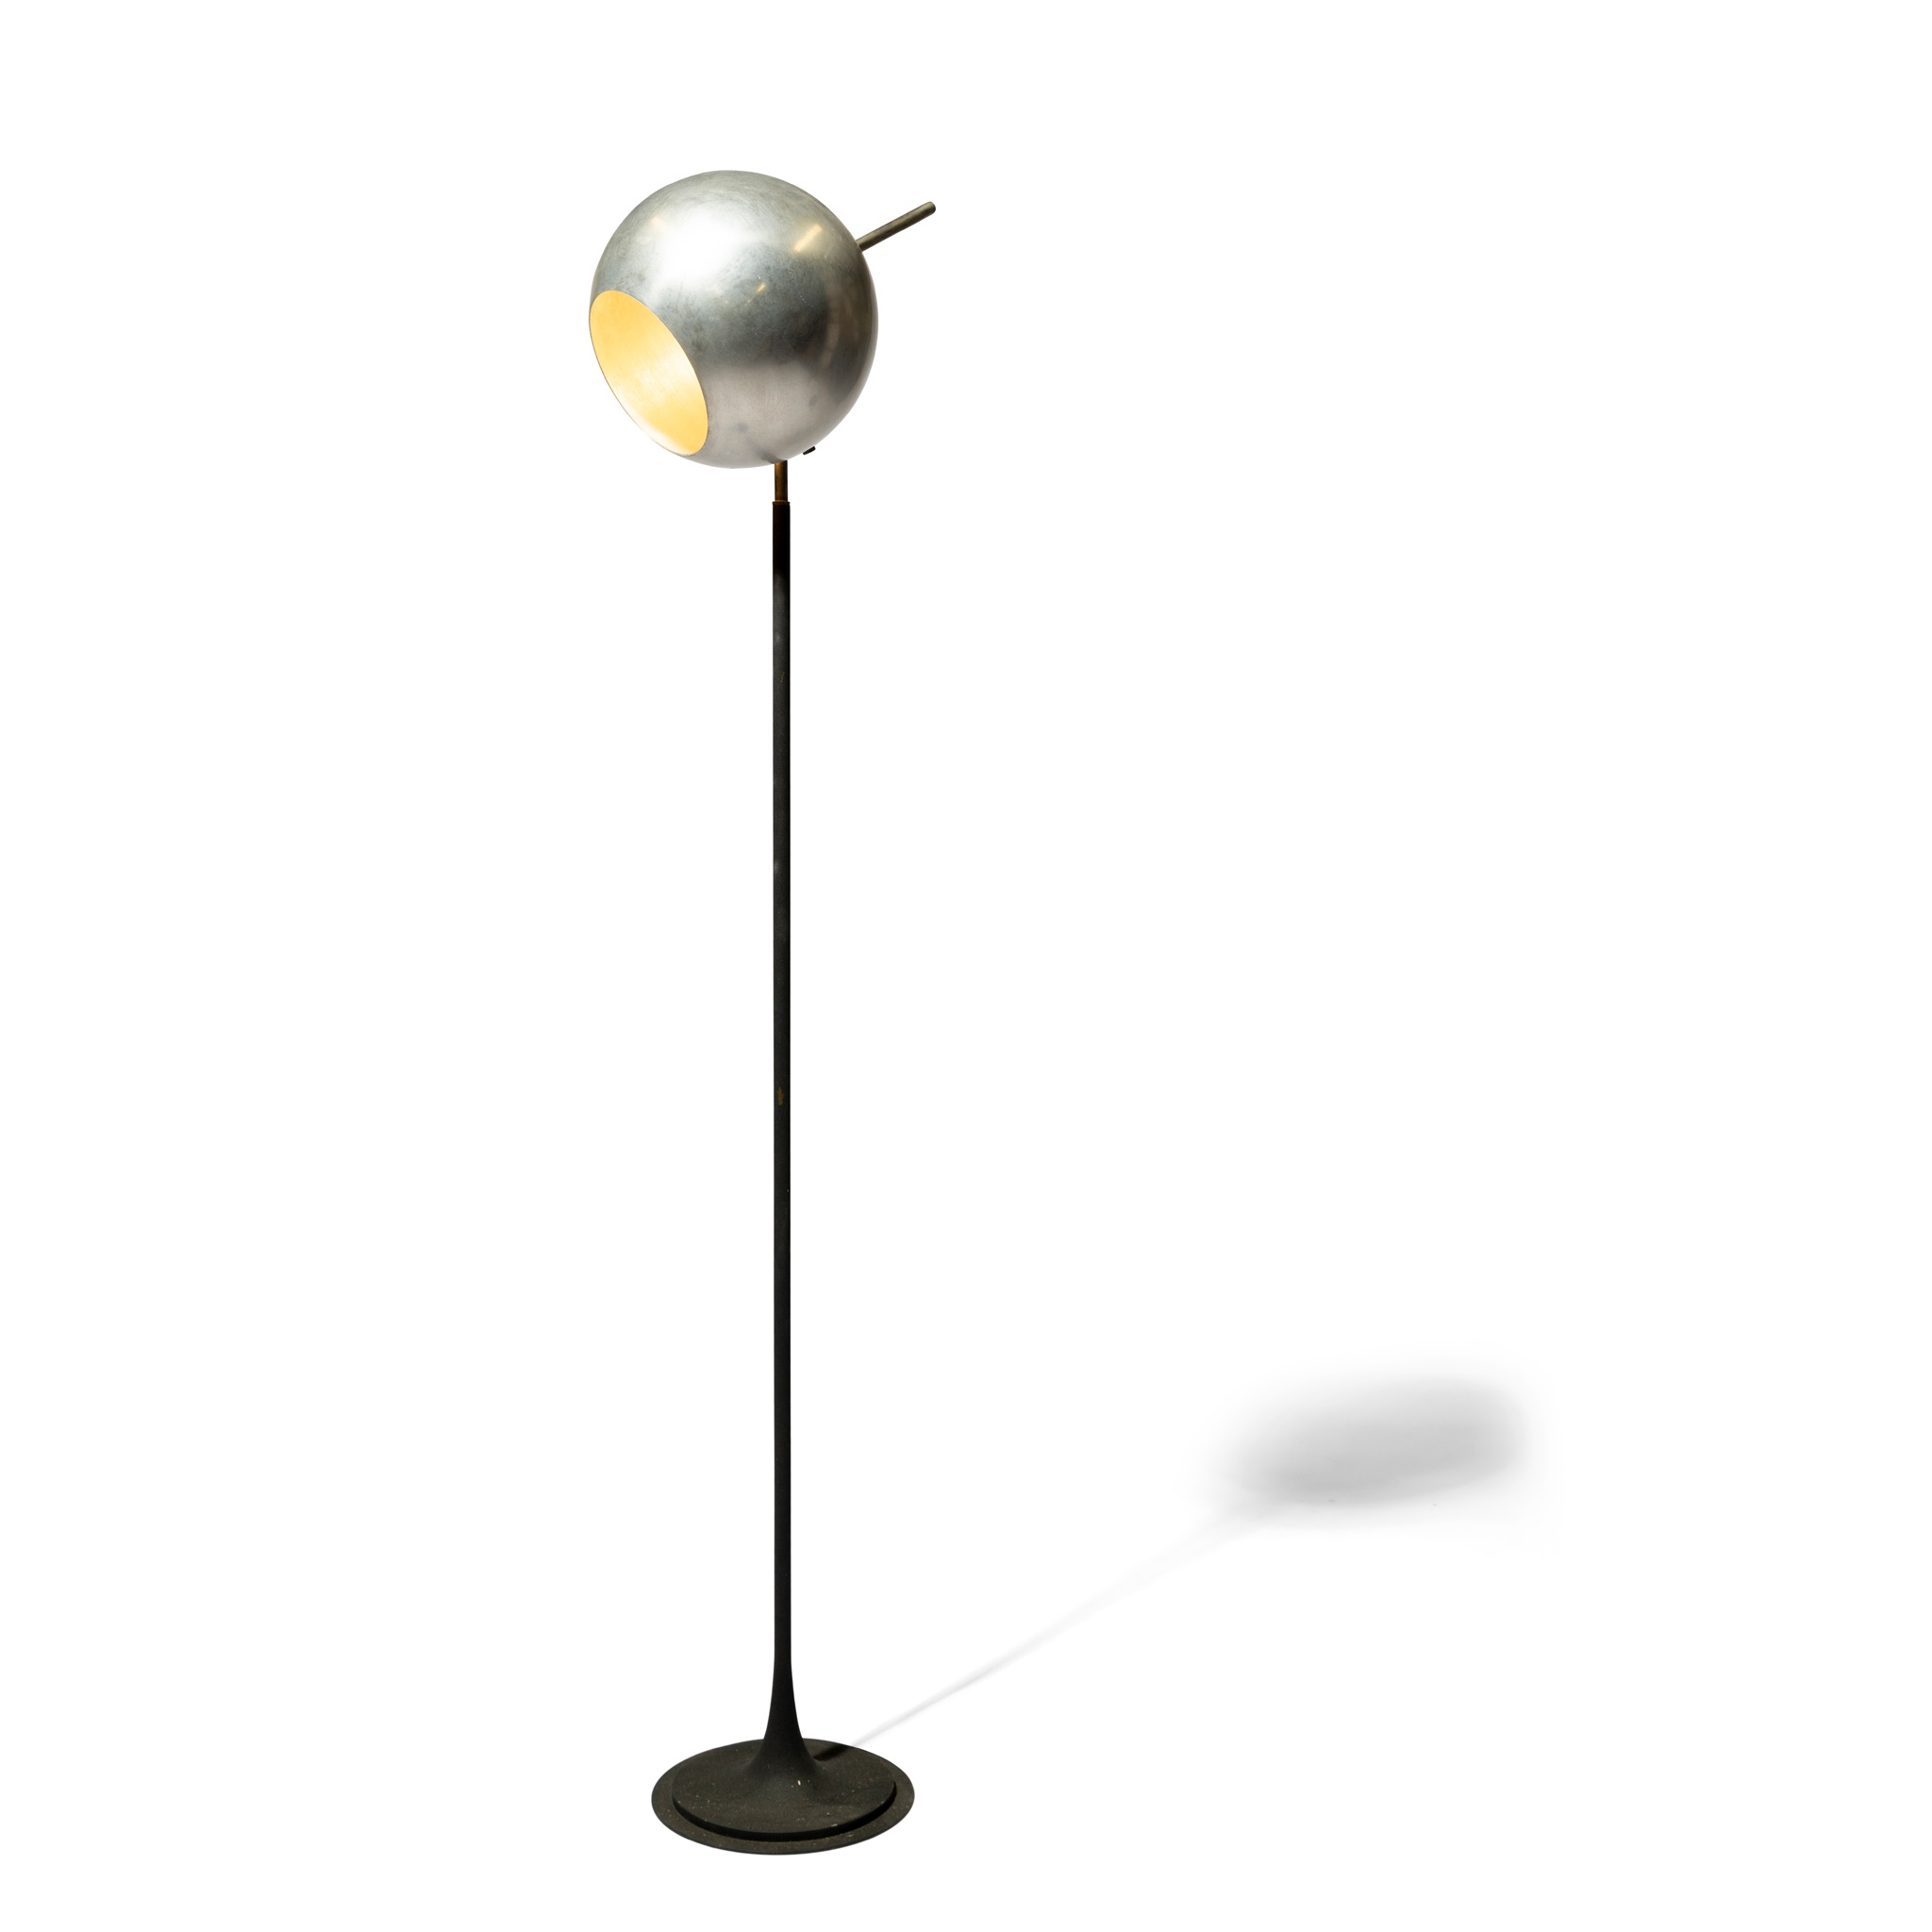 GINO SARFATTI (ITALIAN 1912-1985) FOR ARTELUCE | FLOOR LAMP, DESIGNED 1962 | £3,000 - £5,000 + fees